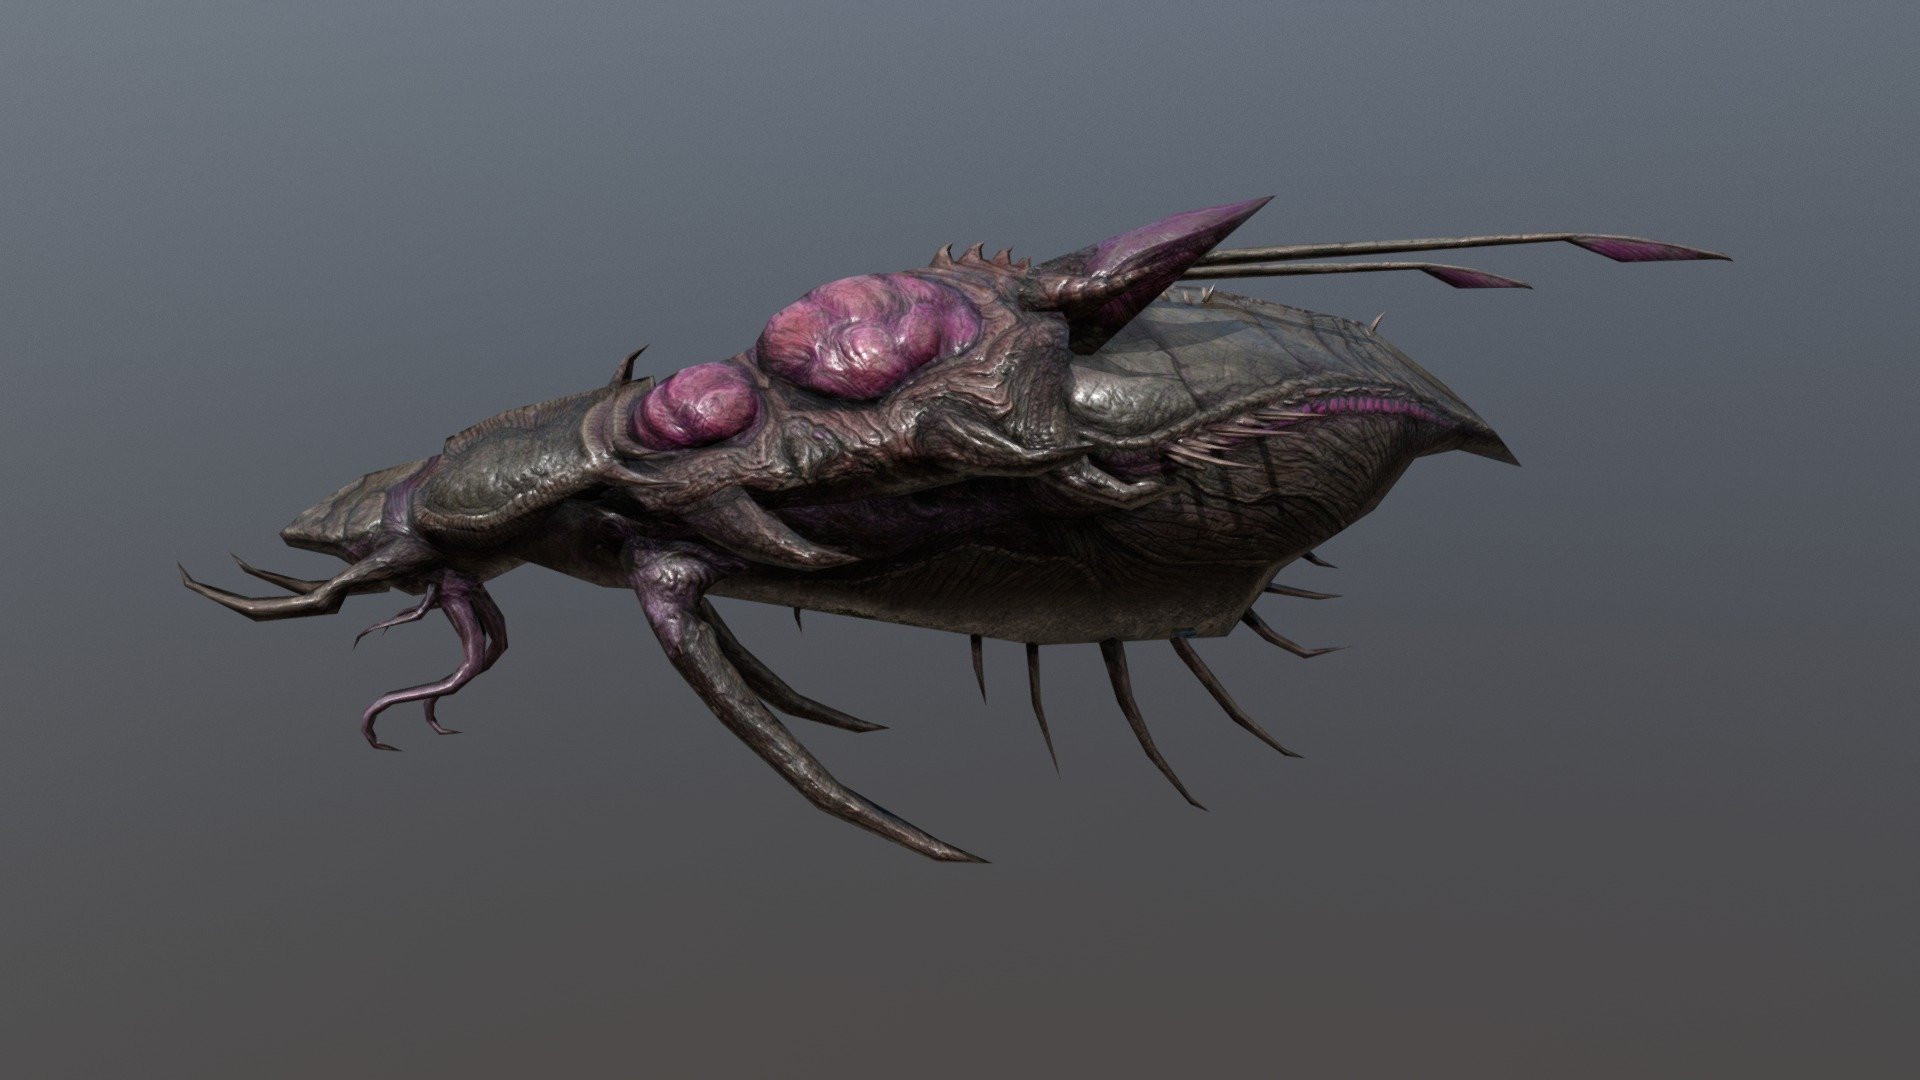 Zerg Leviathan LOD model - 3D model by Robear (@xiaorobear) .